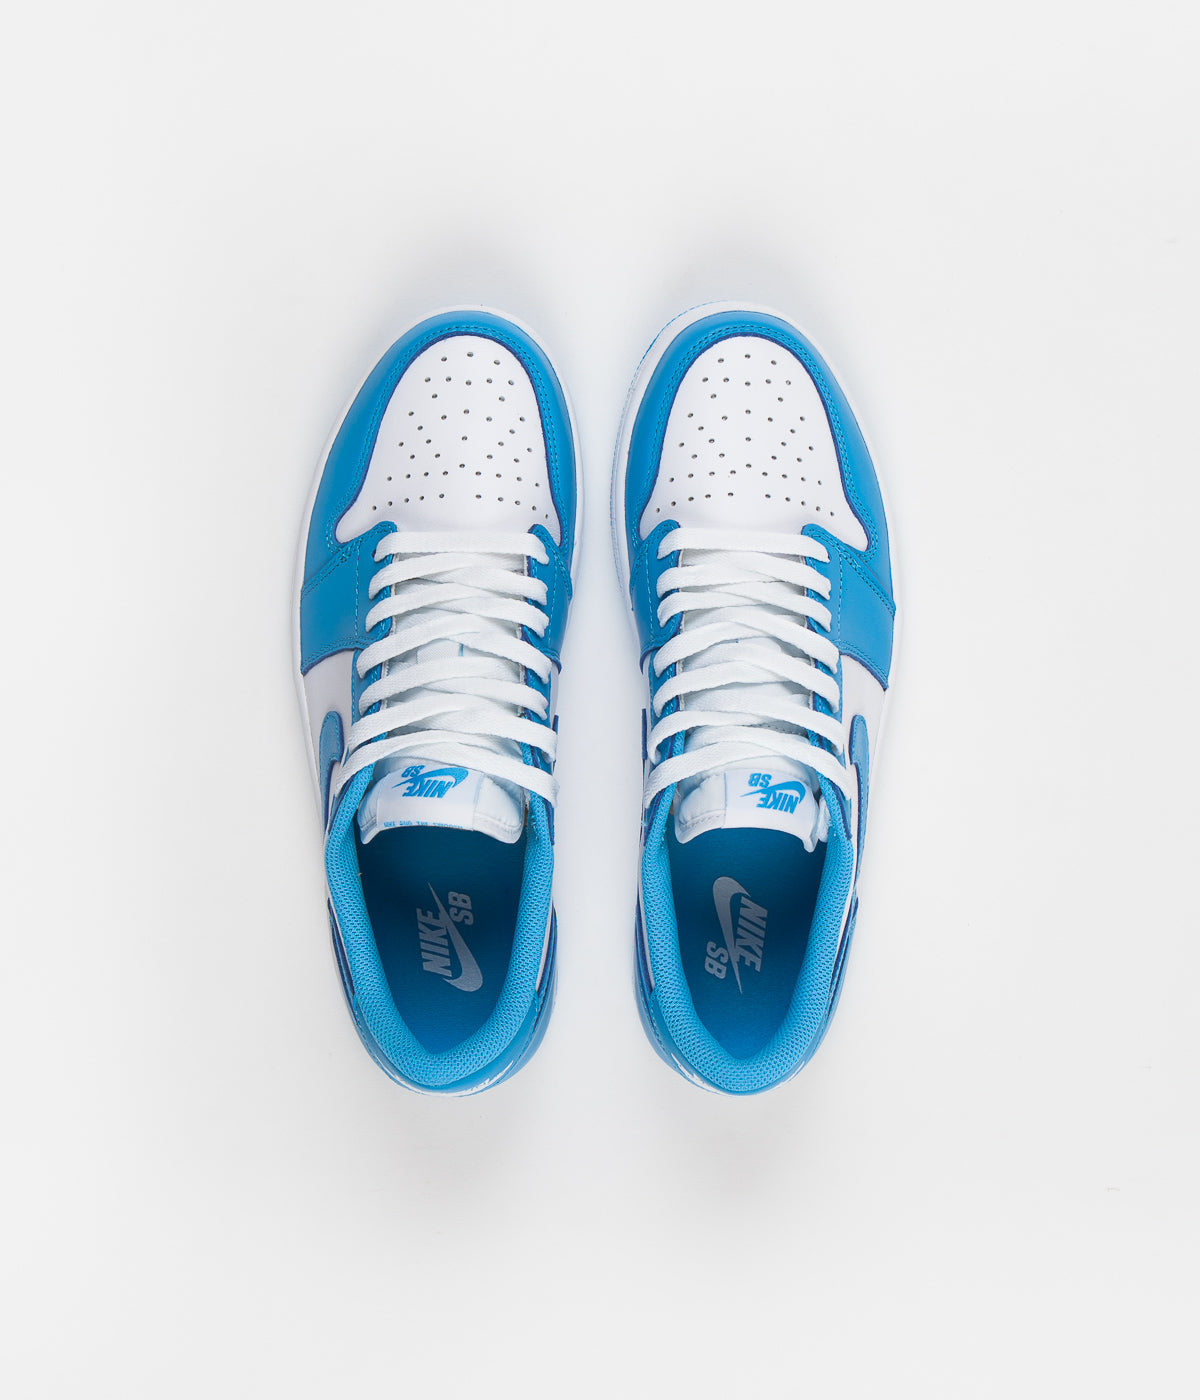 Nike SB x Air Jordan Low UNC Shoes - Powder Blue / Dark Powder | Releases.Flatspot